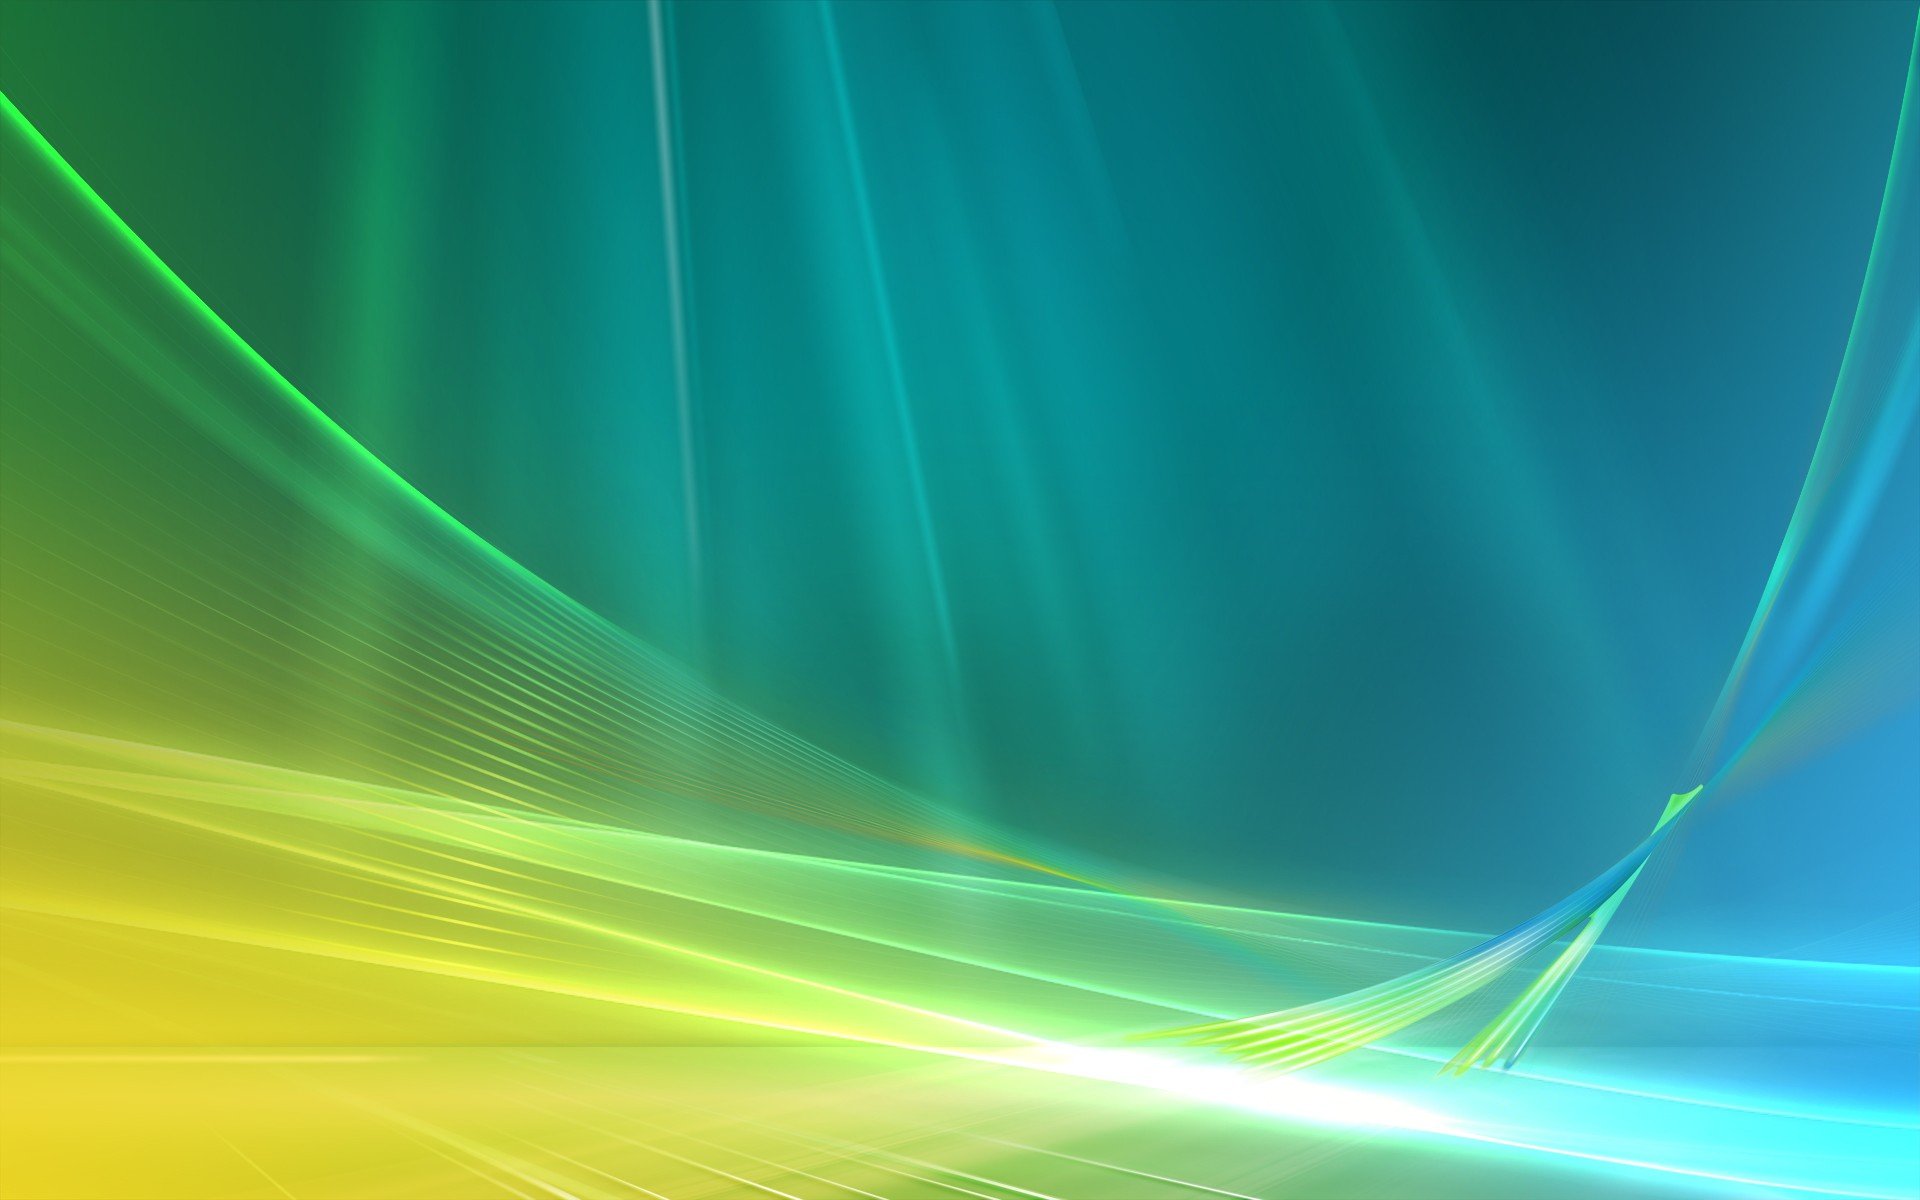 Aesthetic Windows Vista, Blue, Green image | Best Free pics